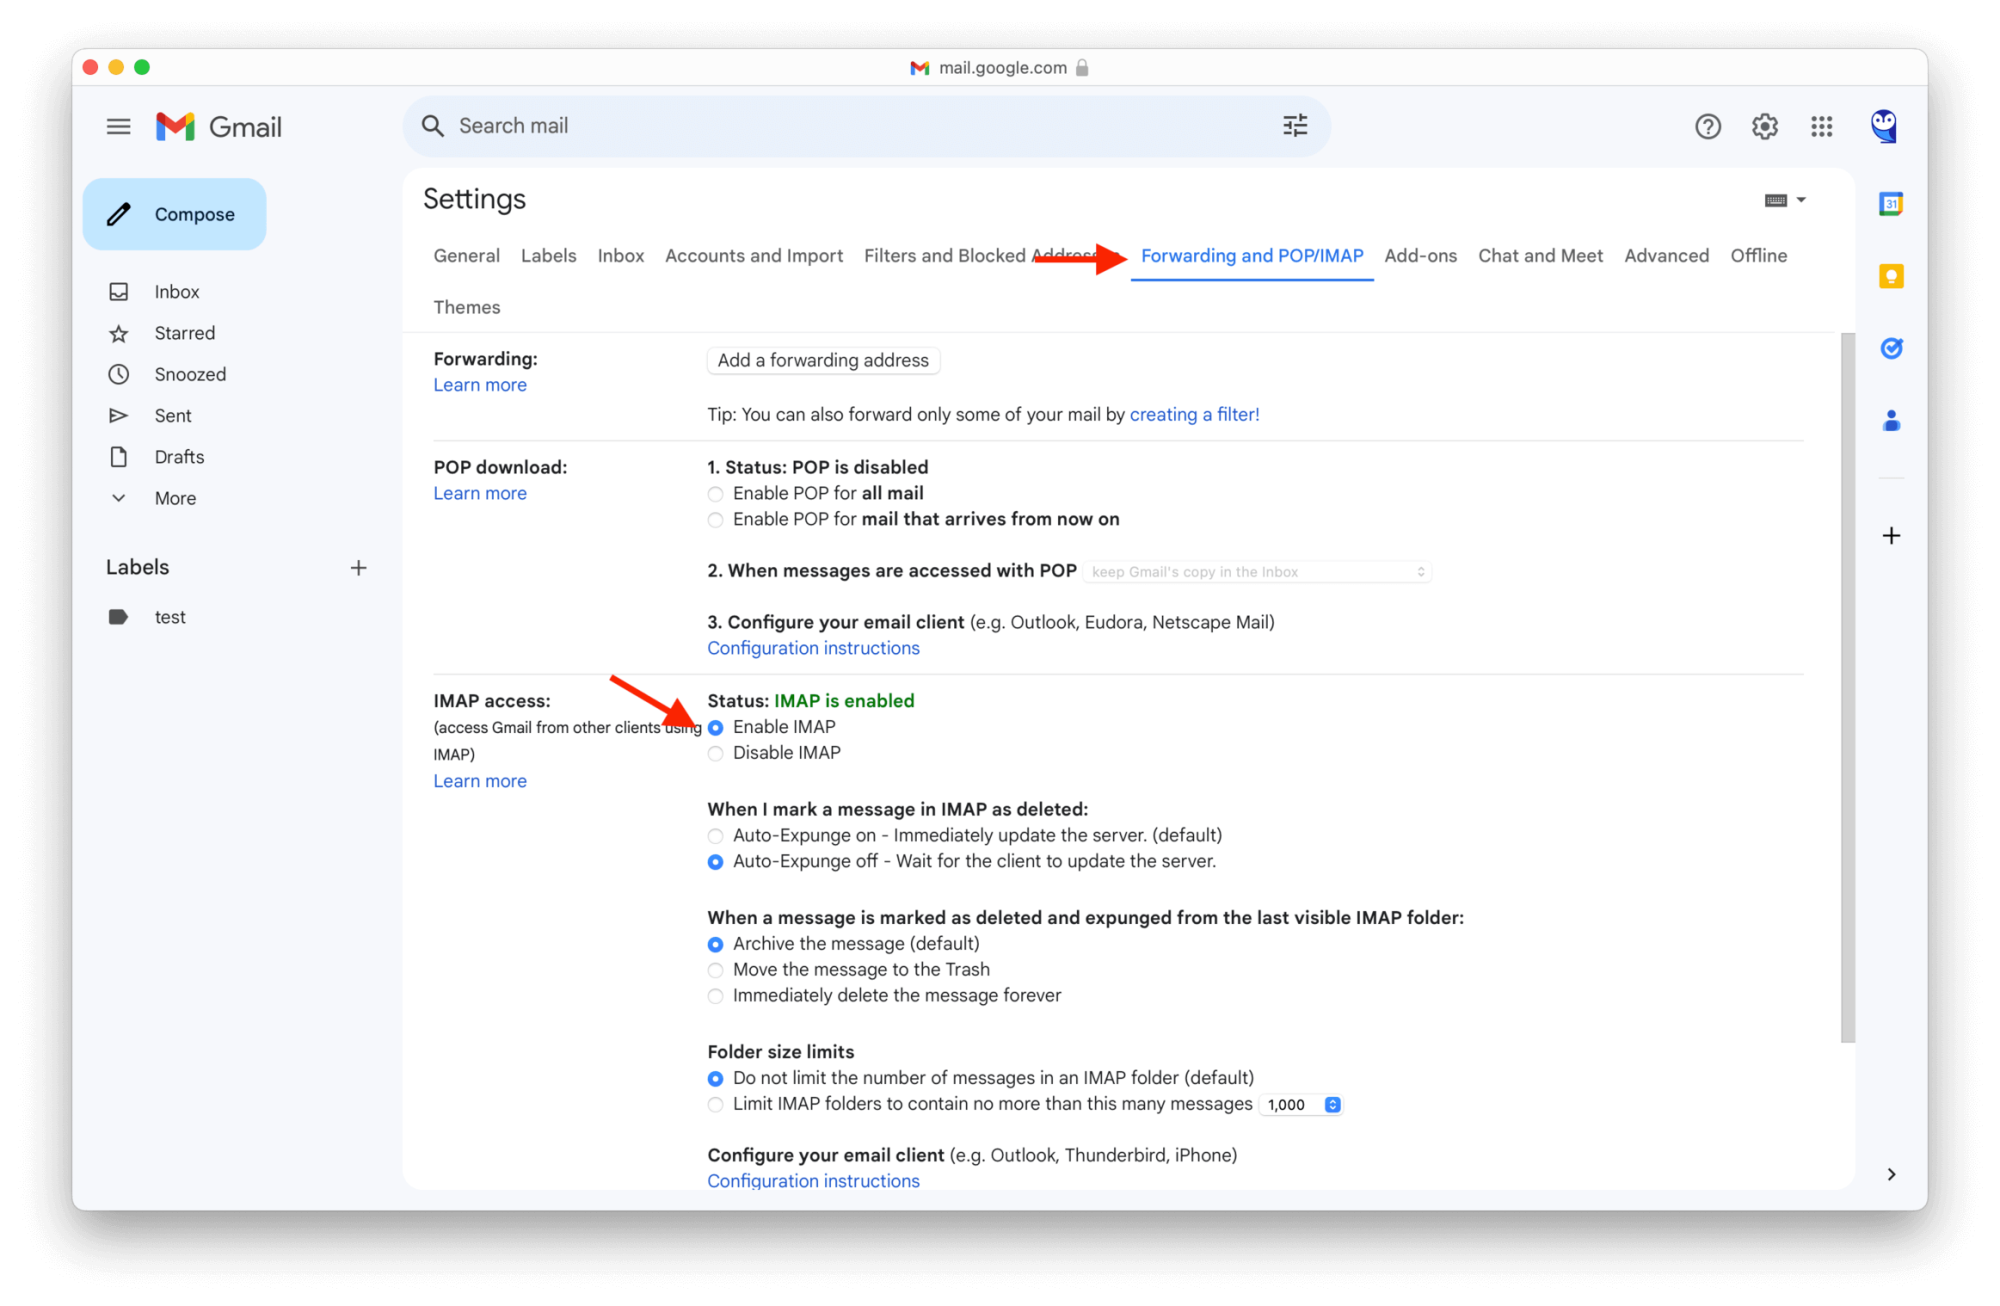 Gmail Migration: Enable IMAP – Forwarding and POP/IMAP